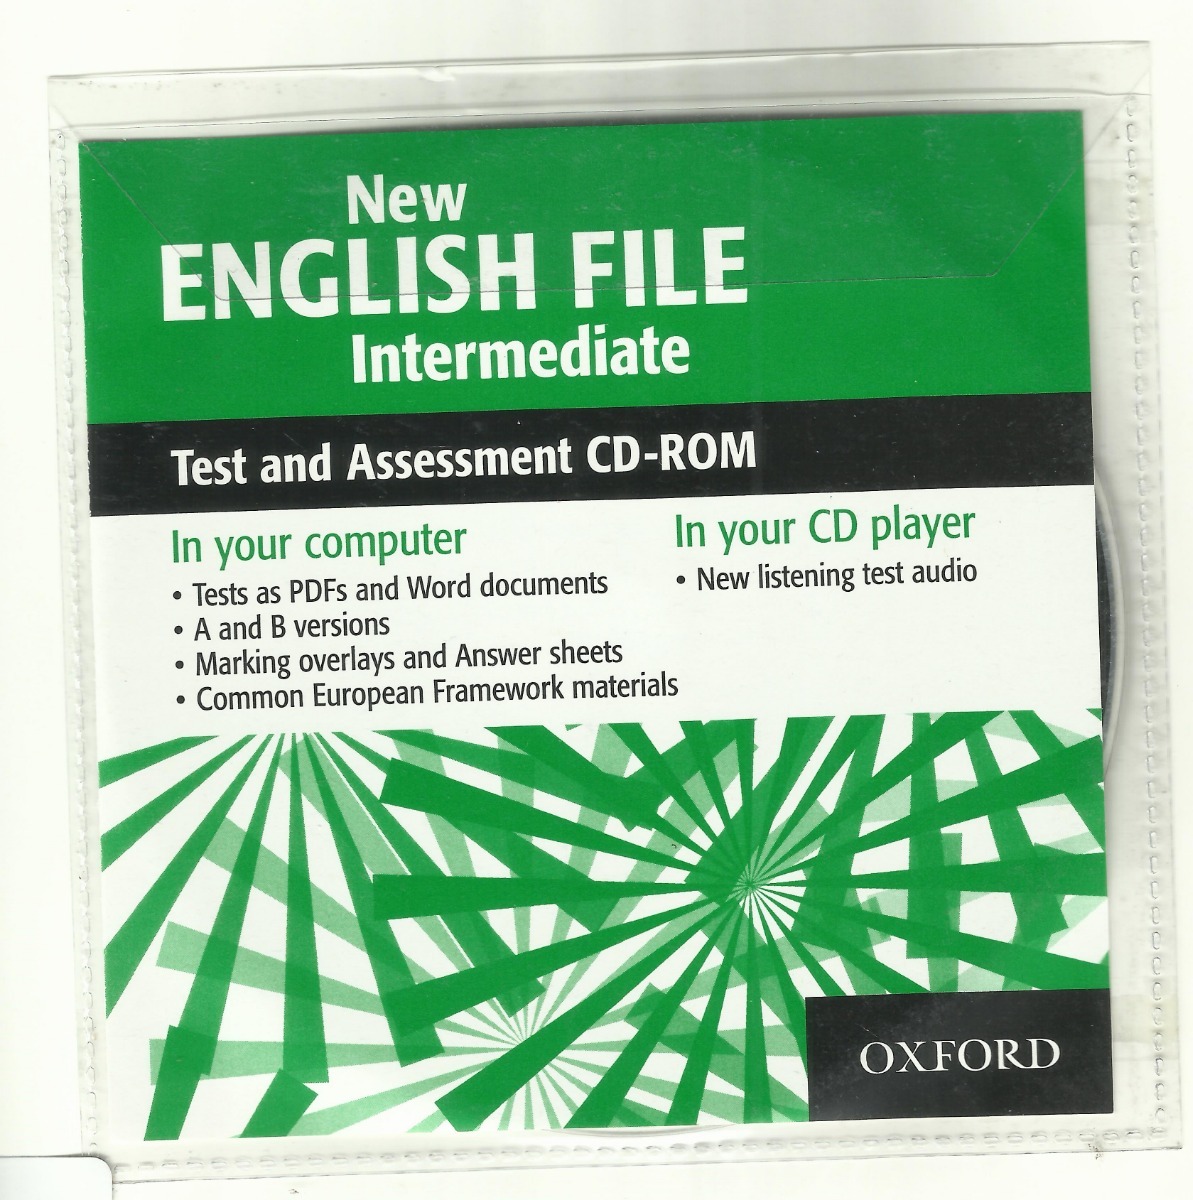 New English file Intermediate. Mood food English file Intermediate. English file Upper Intermediate Tests. 5.6 New English file Intermediate.